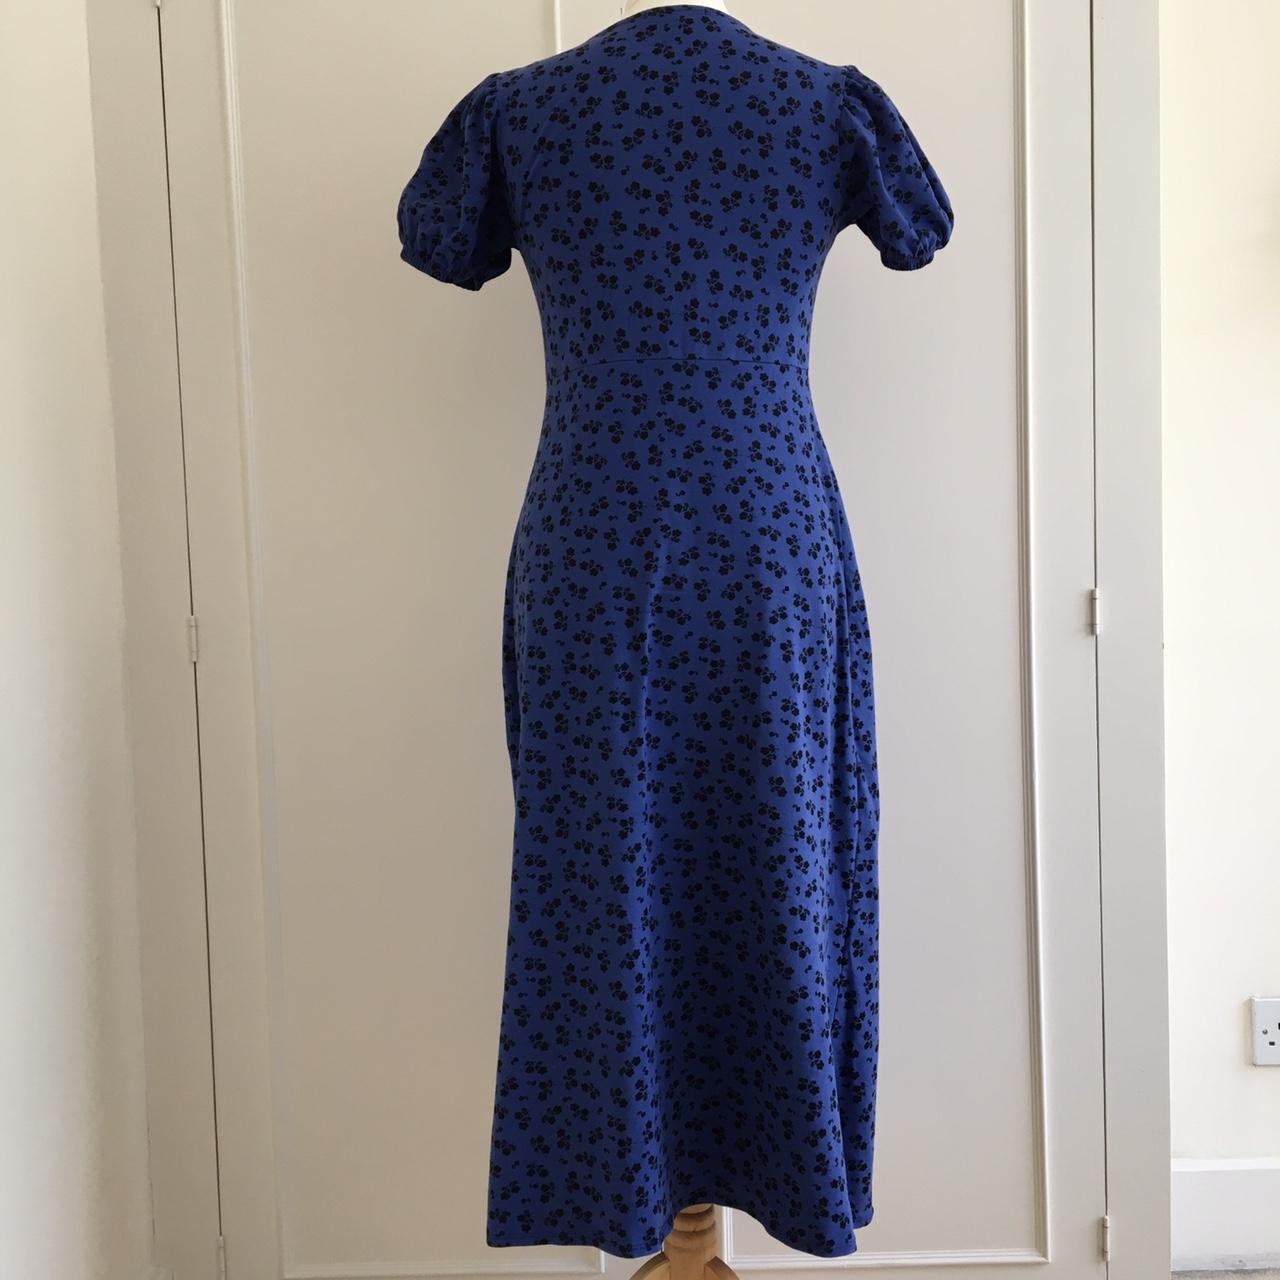 Dorothy Perkins Women's Blue and Black Dress | Depop